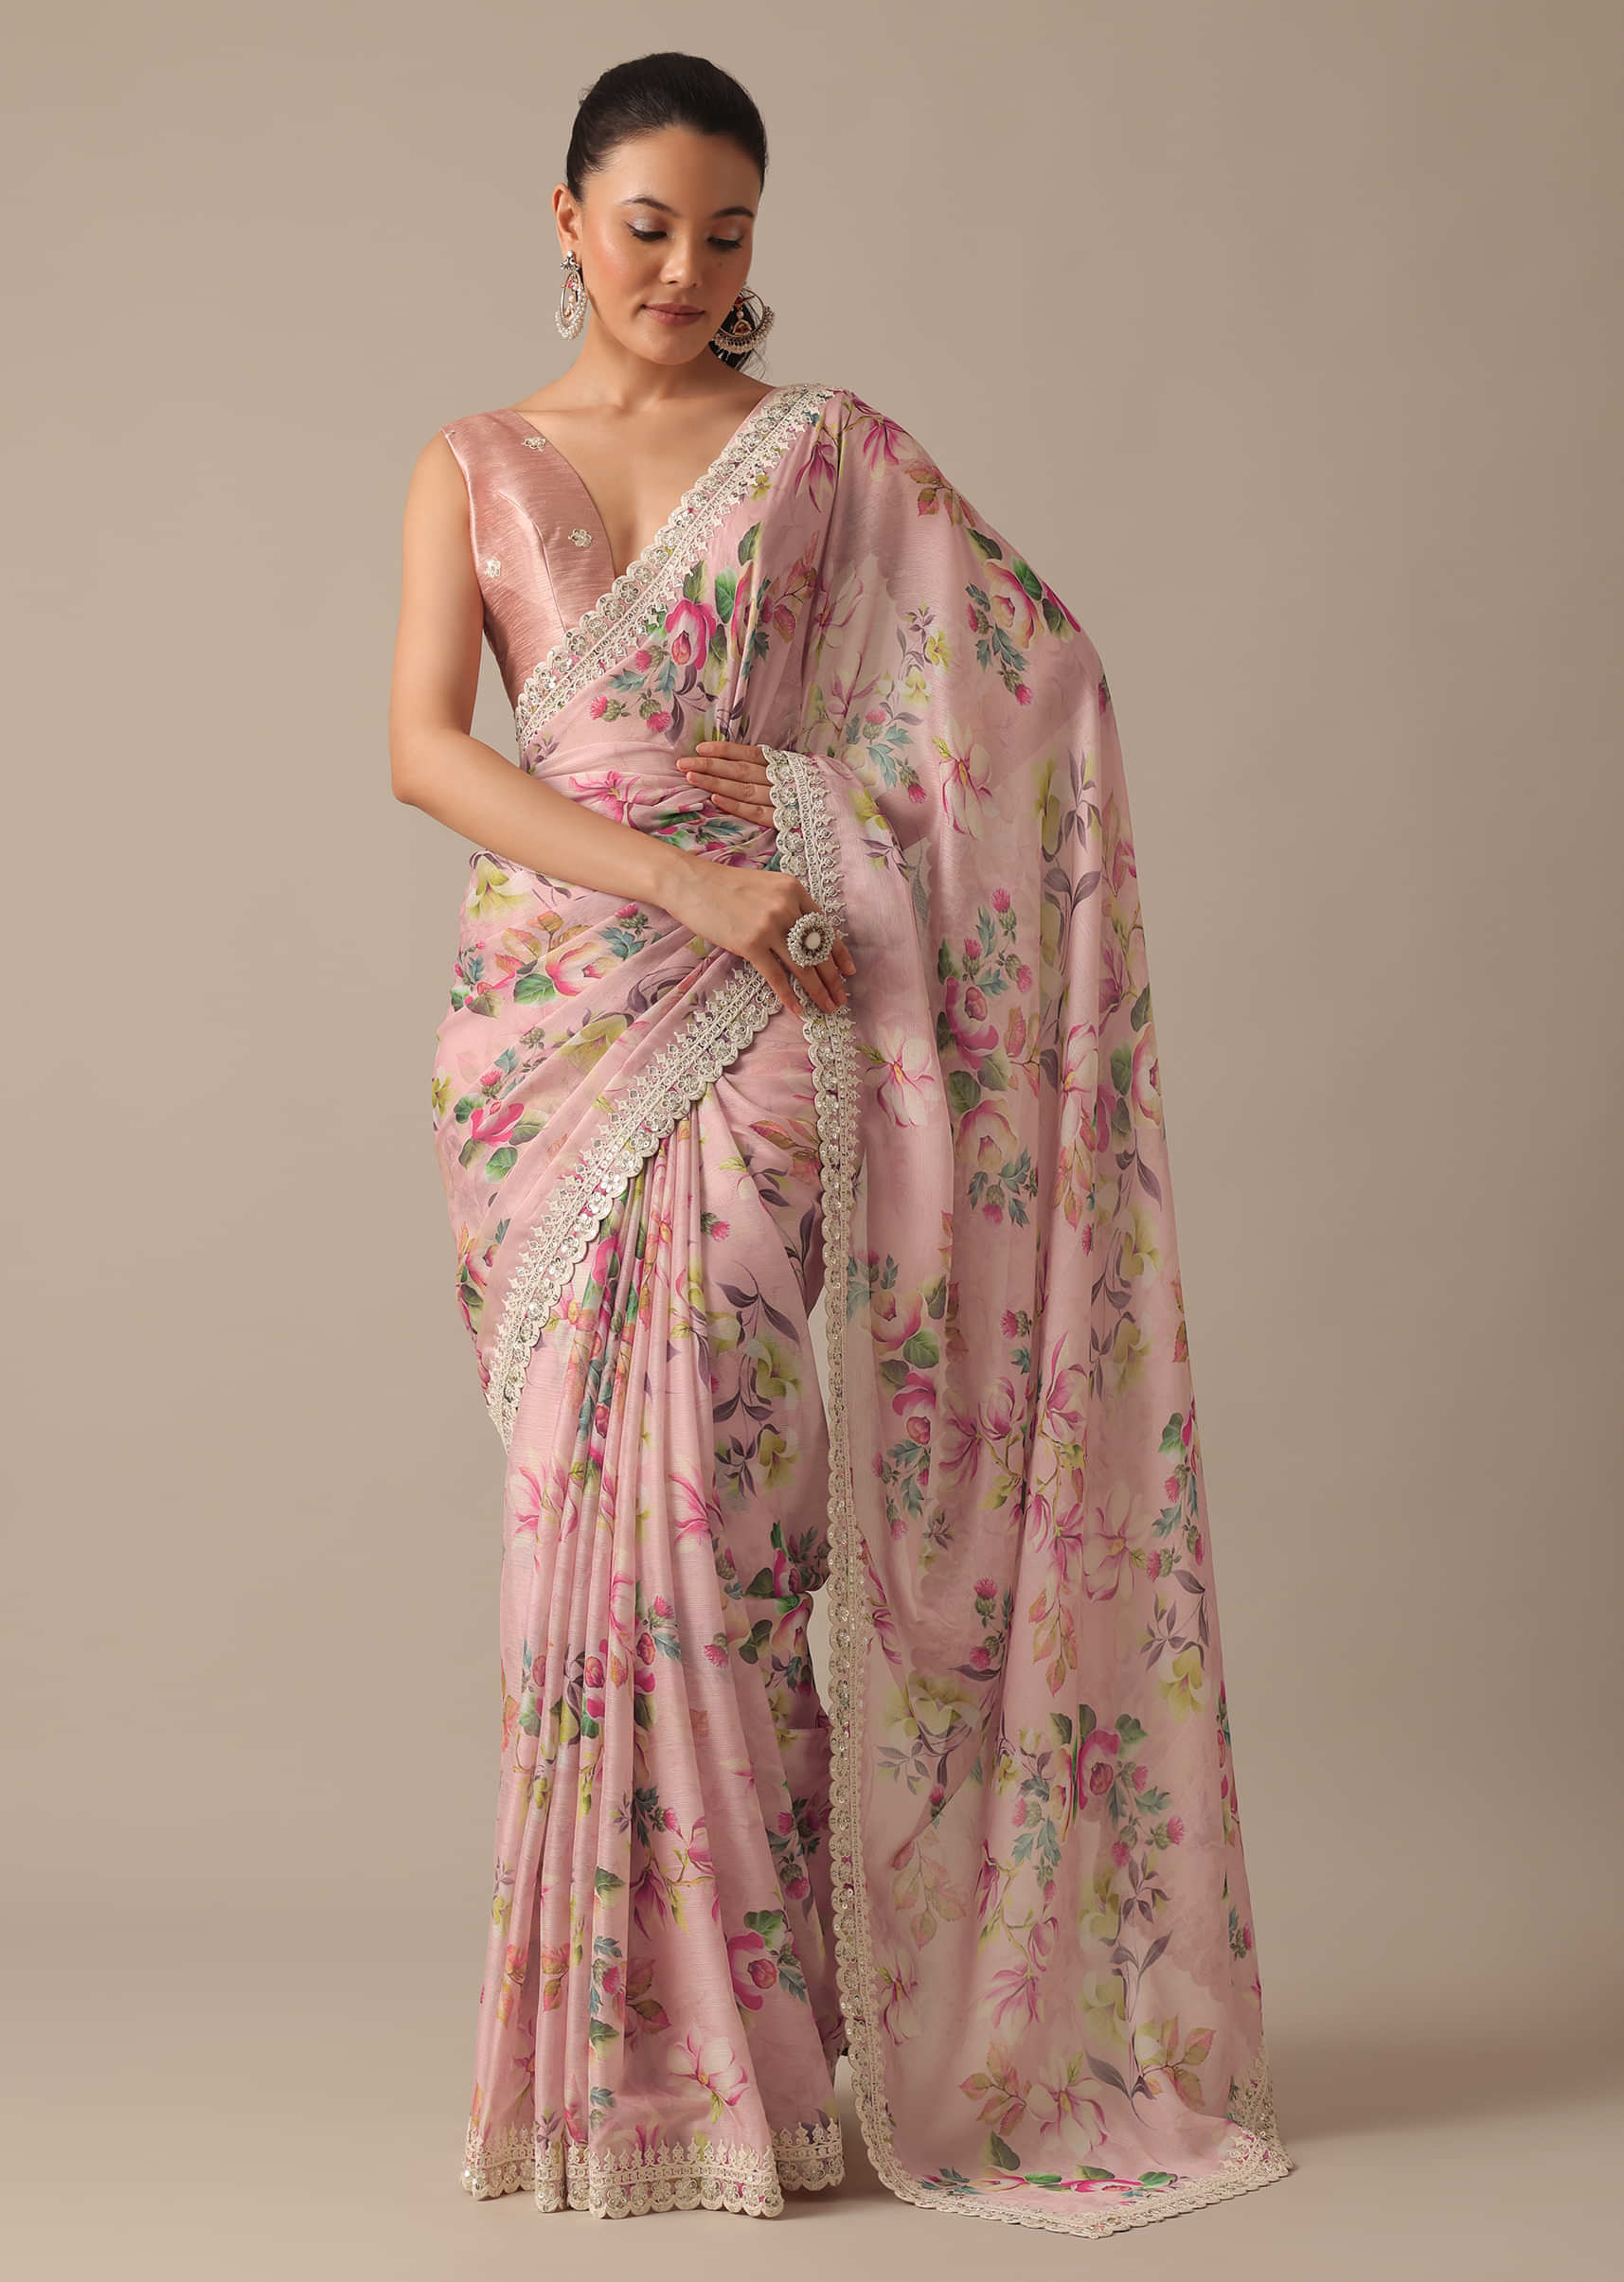 Green Satin Silk Plain Saree With Un-stitched Digital Printed Blouse for  Women Wear Party Wear Wedding Wear Sari 